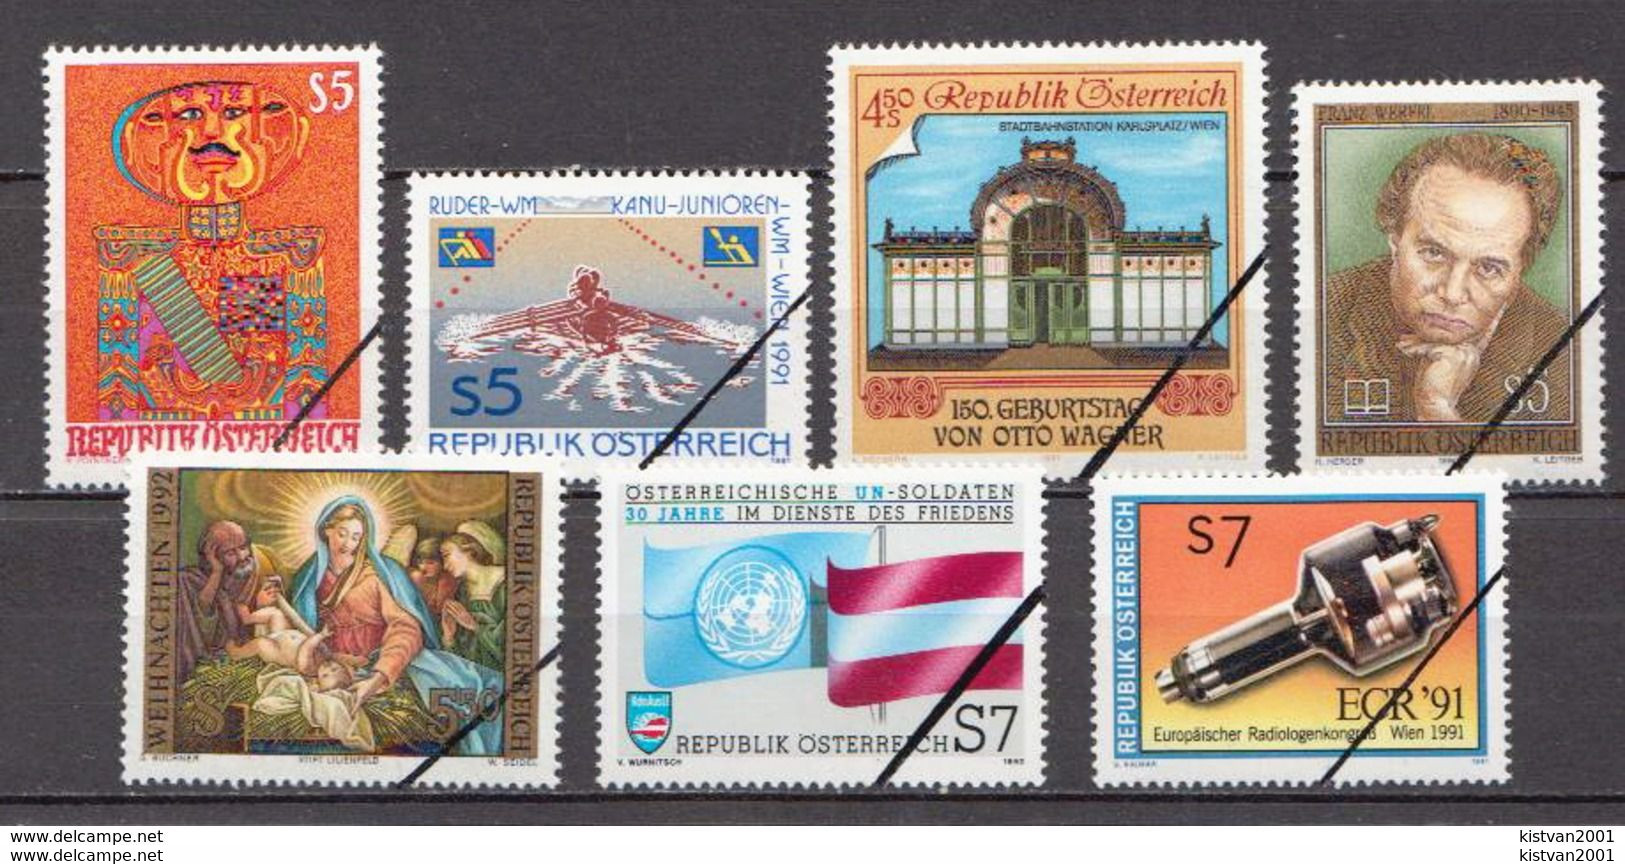 Slovenia mint postal stationery card with Vzorec / Specimen overprint and 7 more specimen items